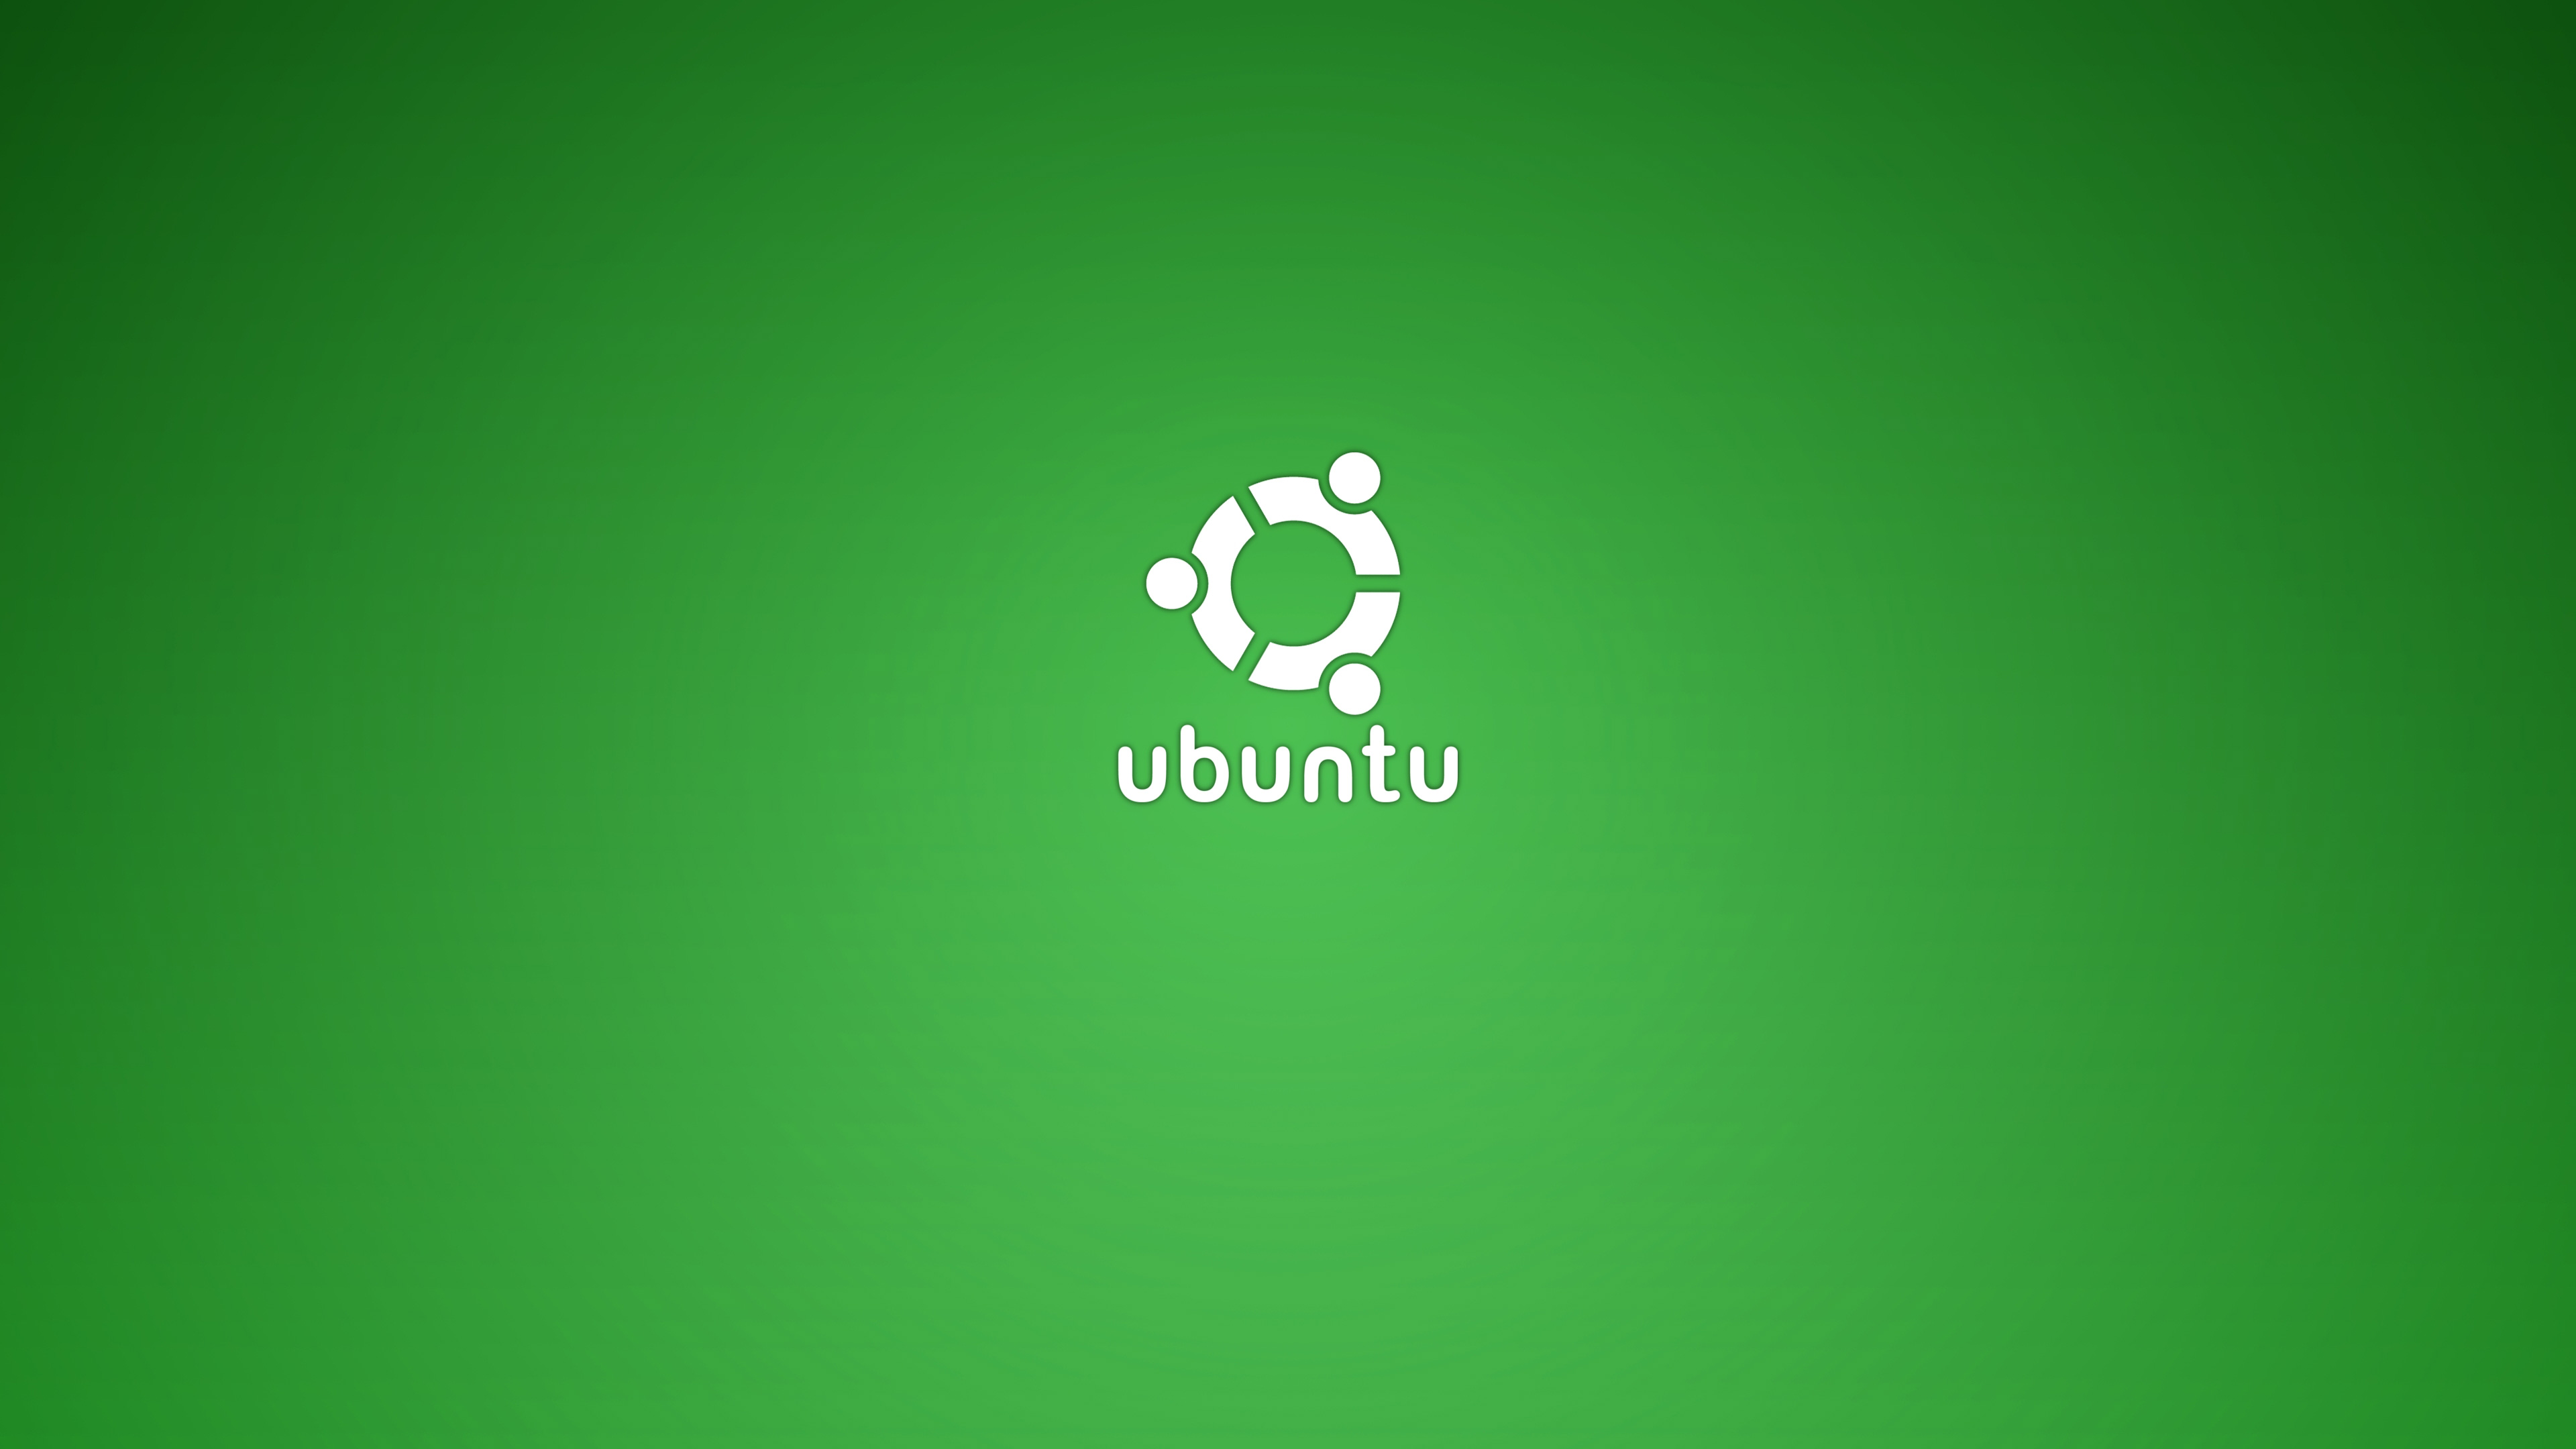 ubuntuの壁紙,緑,フォント,テキスト,グラフィックス,オペレーティング・システム